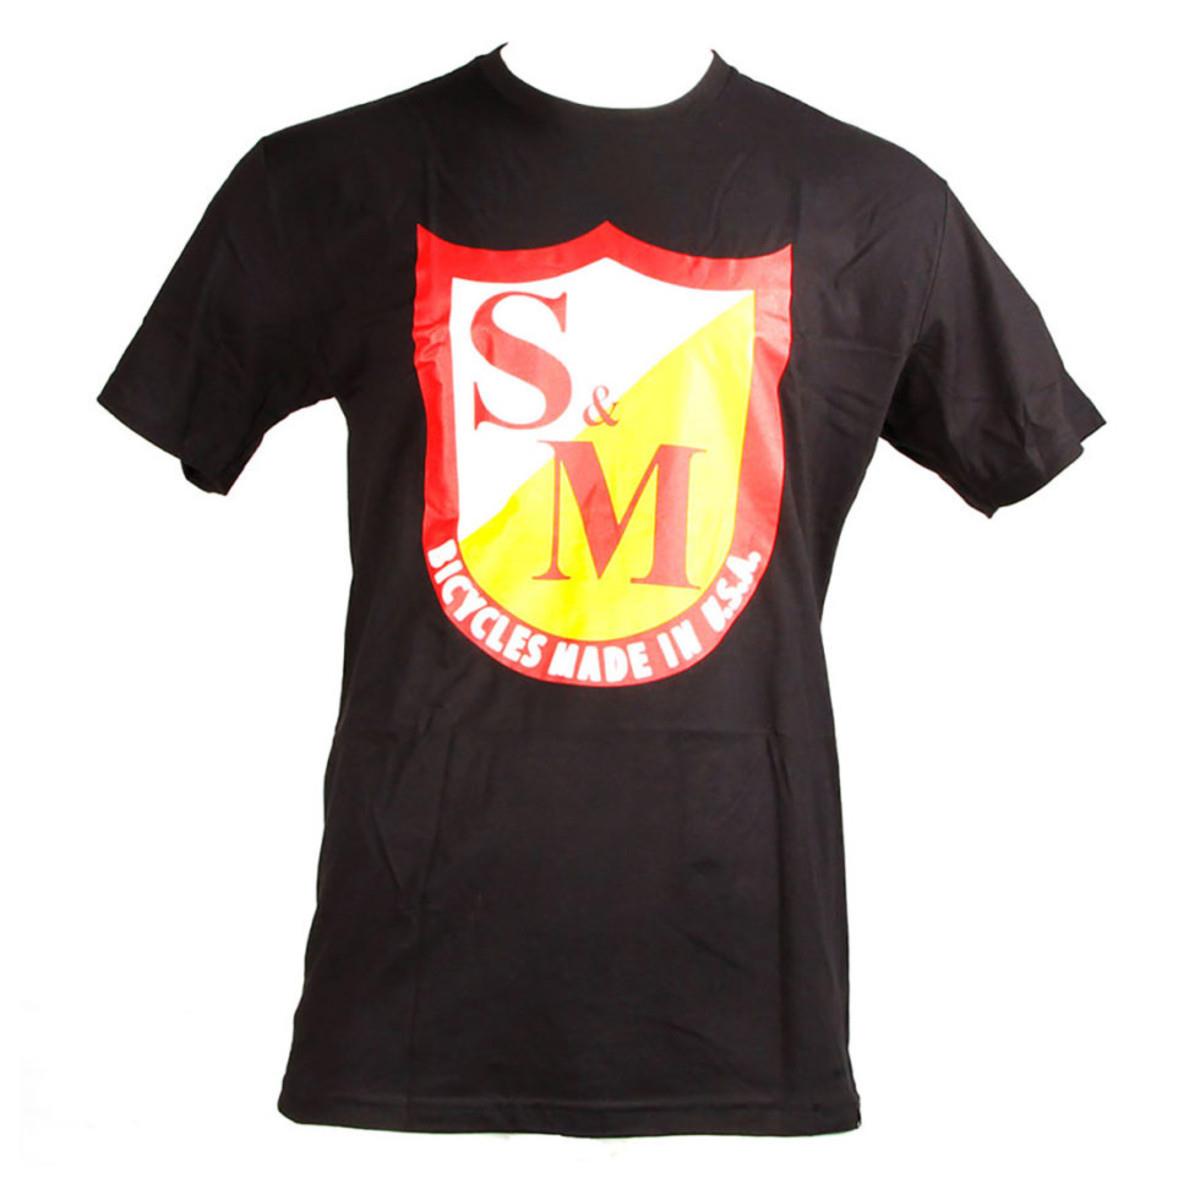 S&M Classic Shield T-Shirt - Black